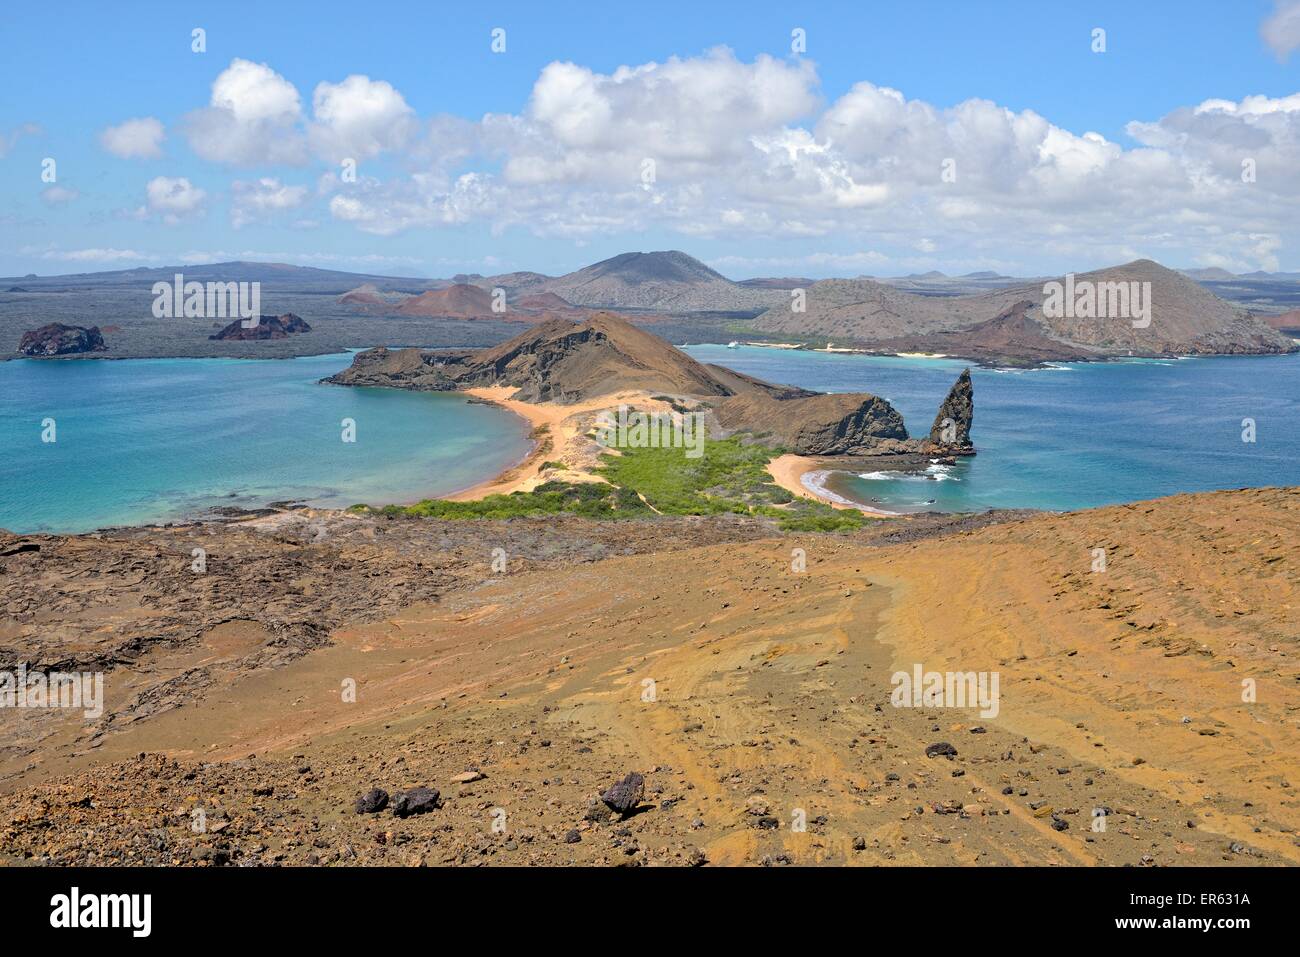 Bartolomé Island, western peninsula with Pinnacle Rock, Santiago Island, also San Salvador Island, behind, Galapagos Province Stock Photo